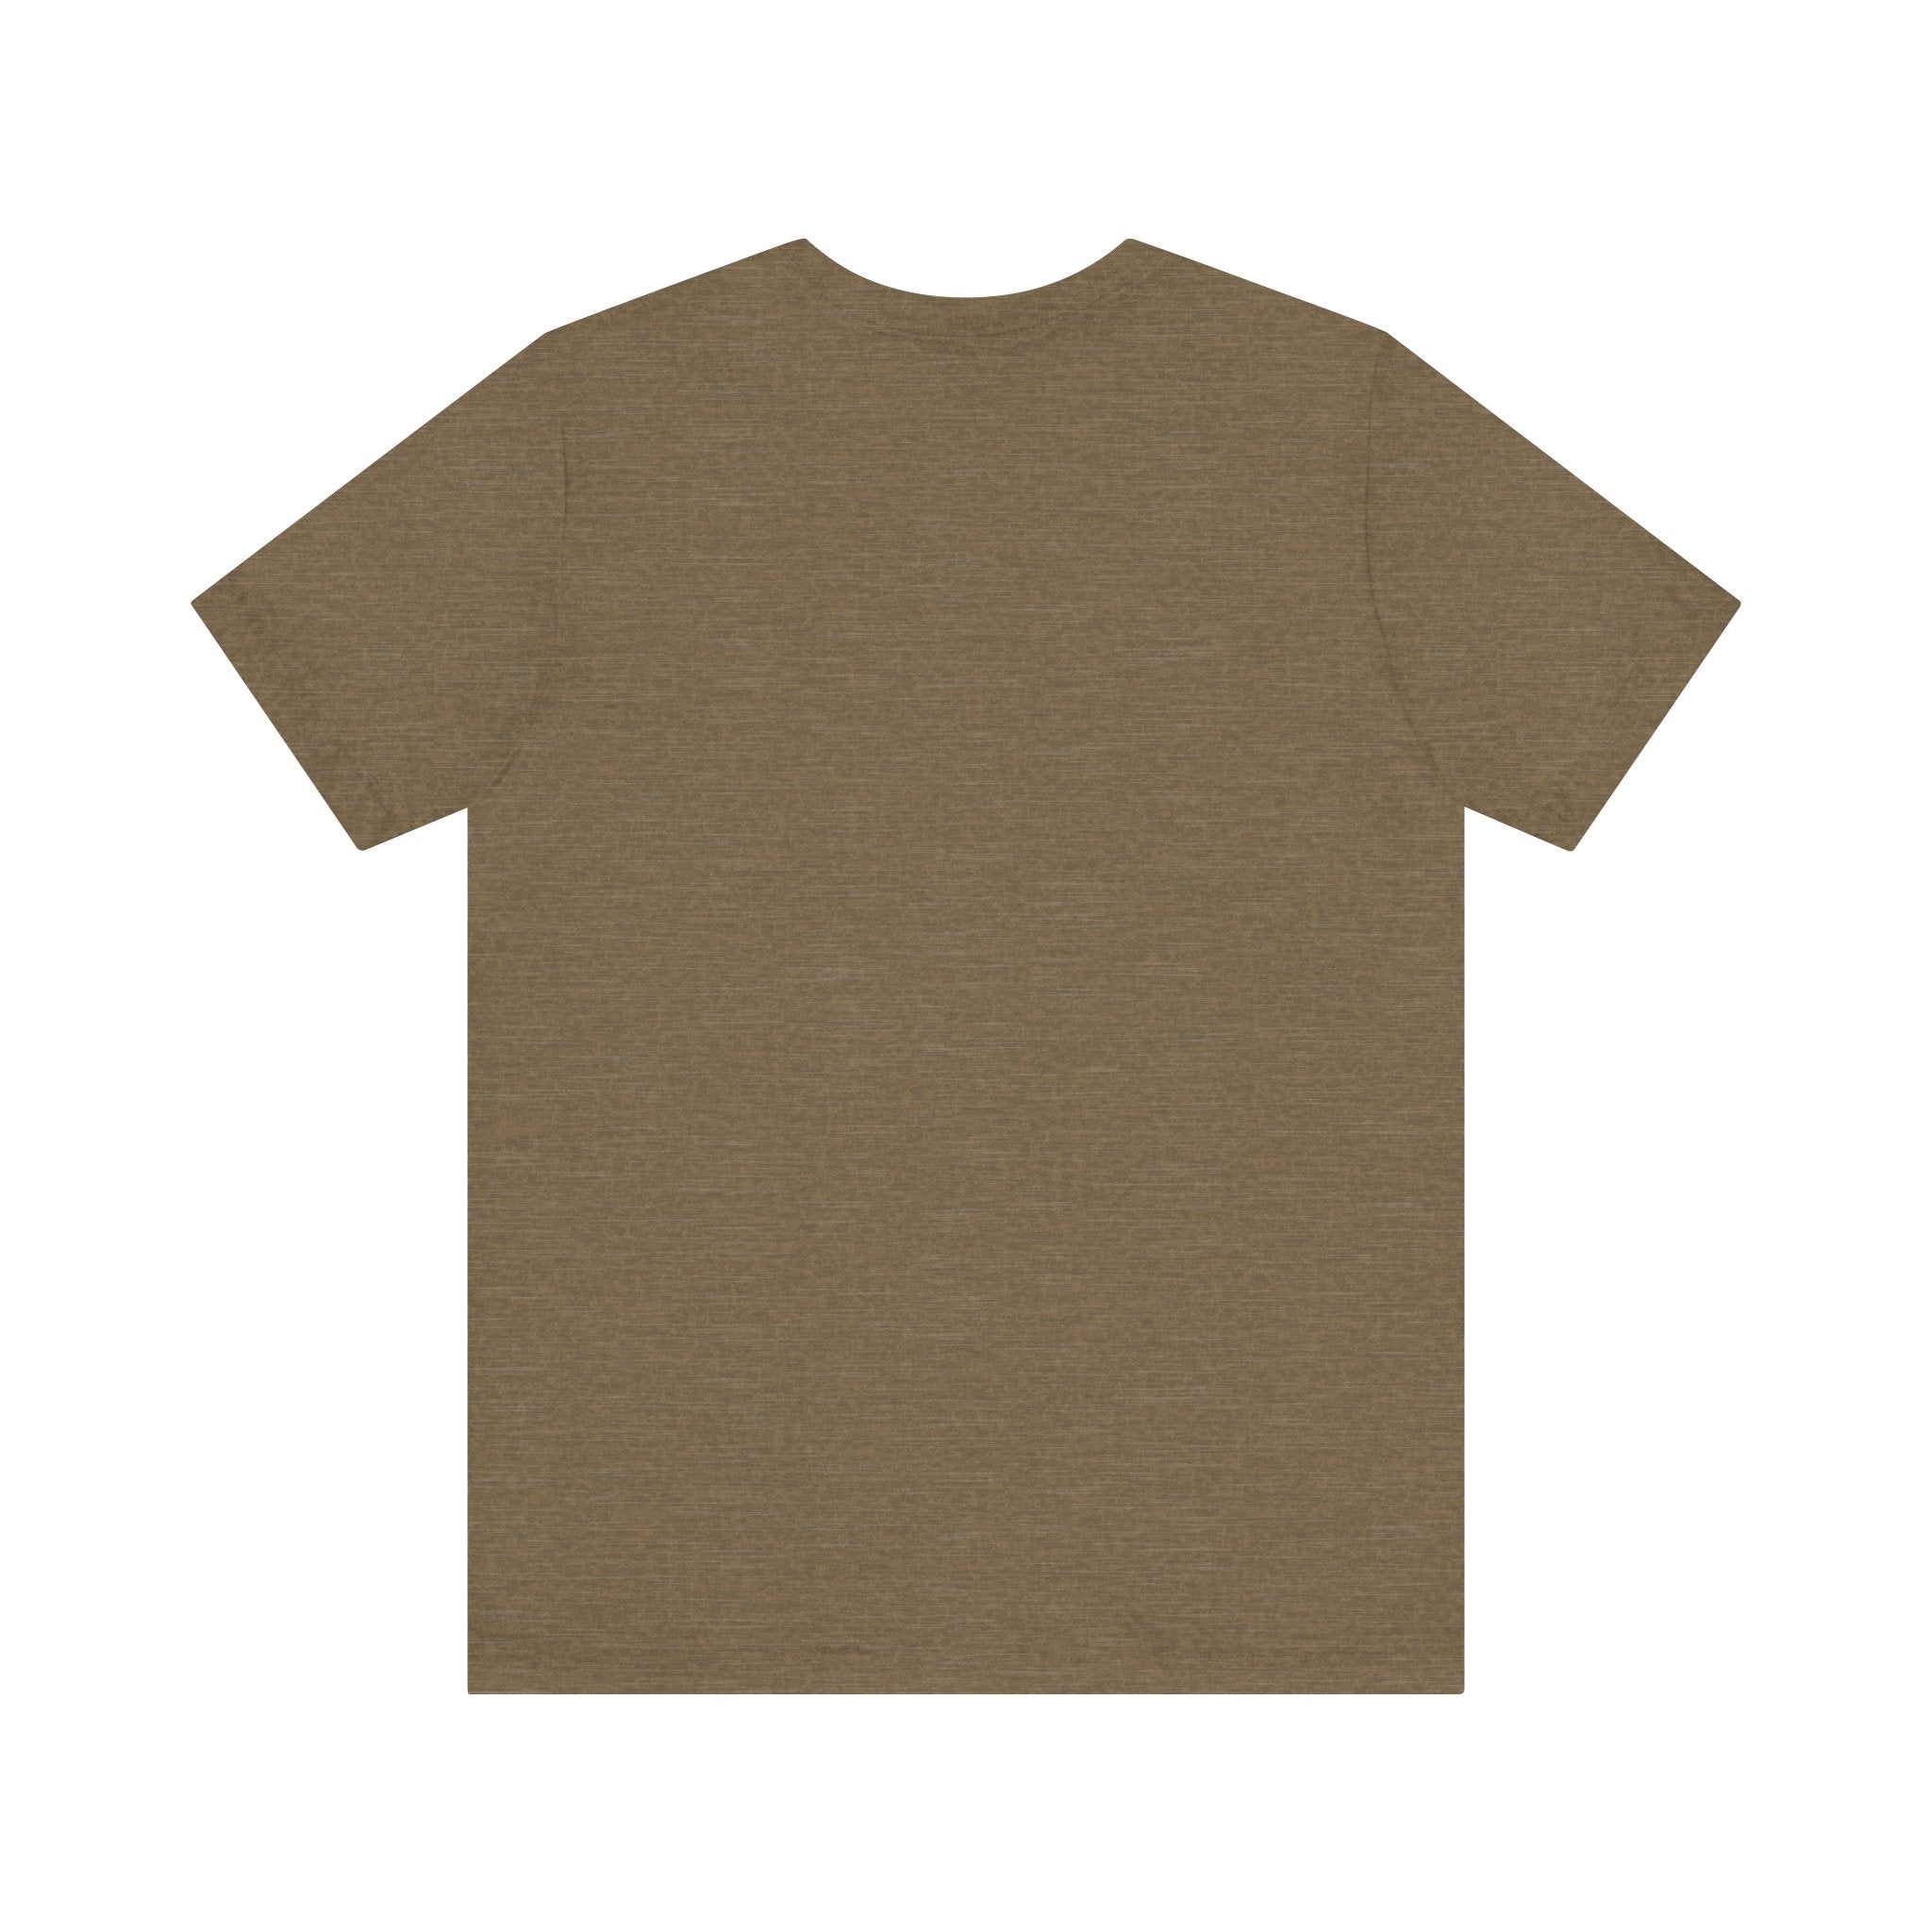 Brown logo-printed unisex t-shirt by Bella & Canvas - Be Amazing - Soulshinecreators